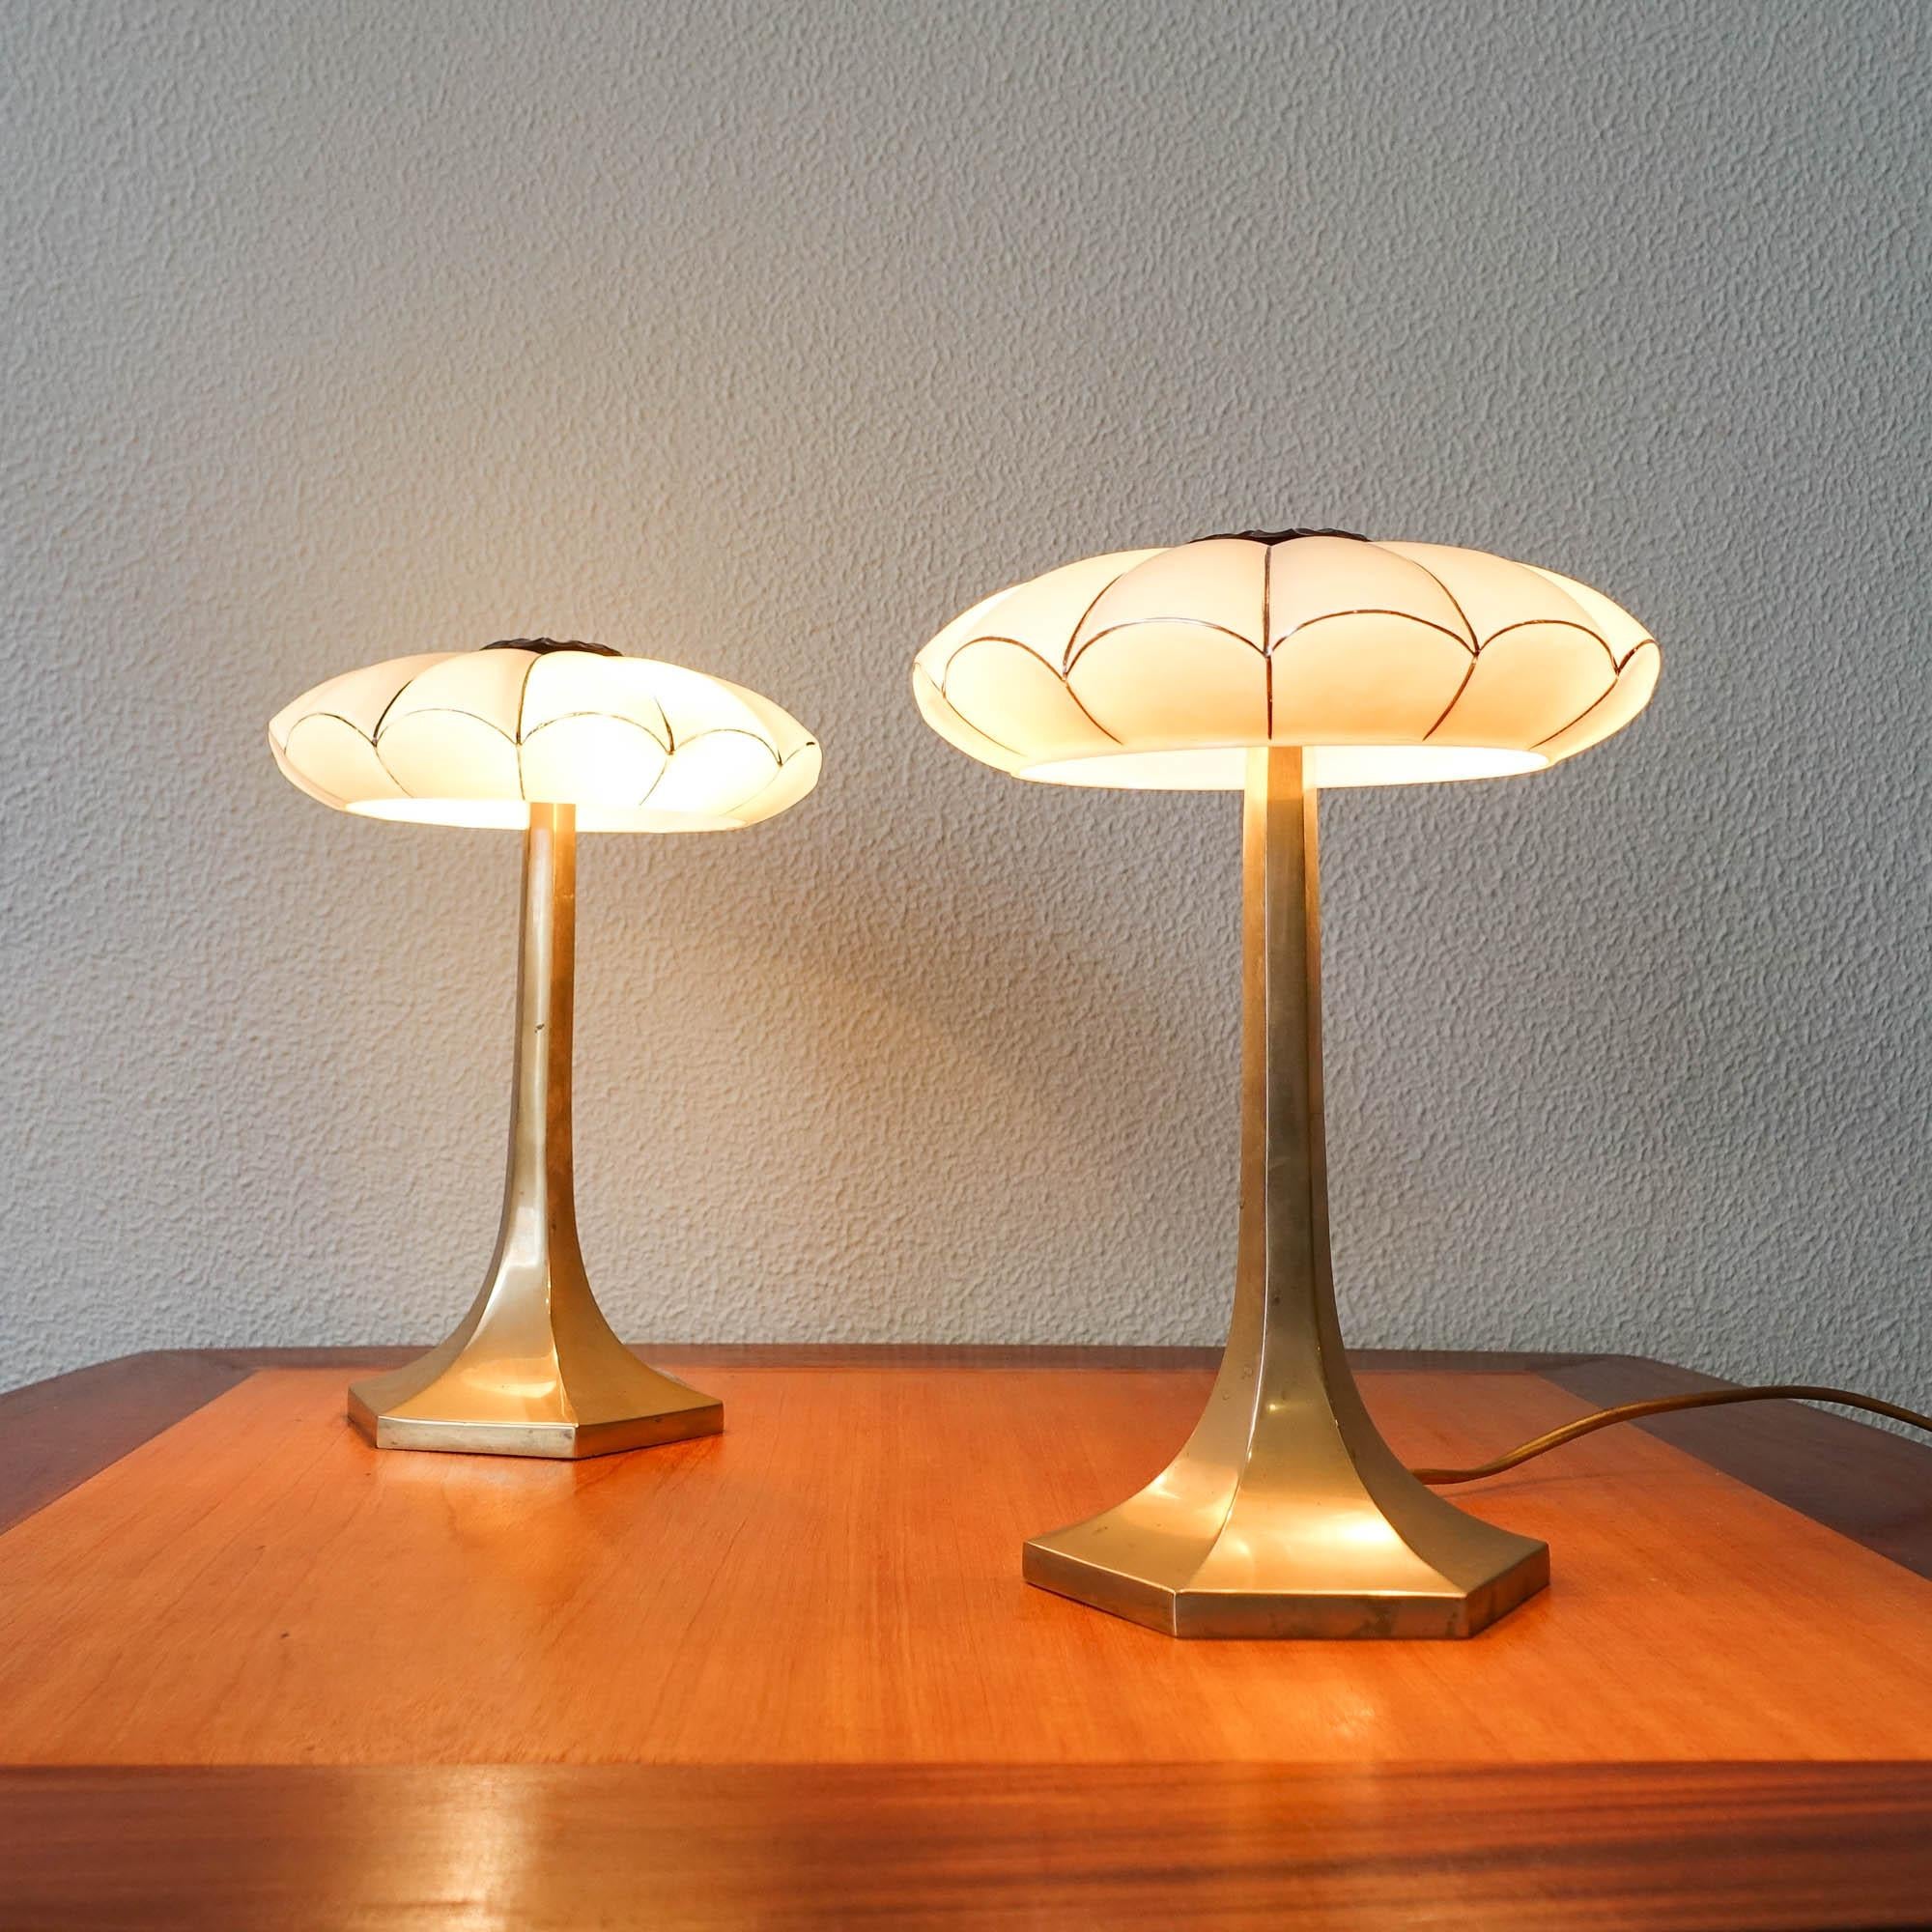 Pair of Art Deco Table Lamps from Josef Hoffman for Wiener Werkstatte, 1930's 1